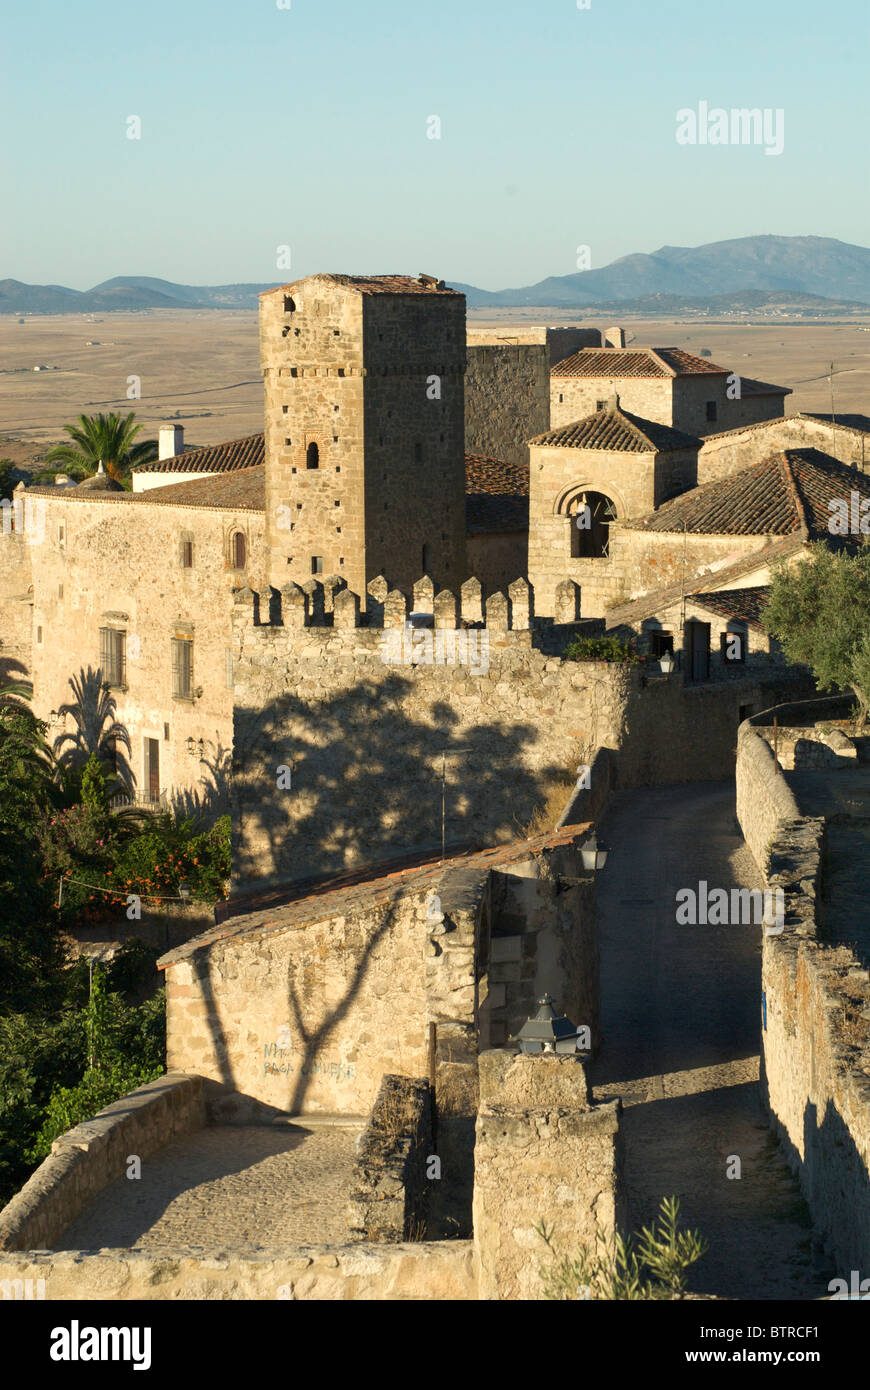 Spain, Trujillo, View of castle Stock Photo